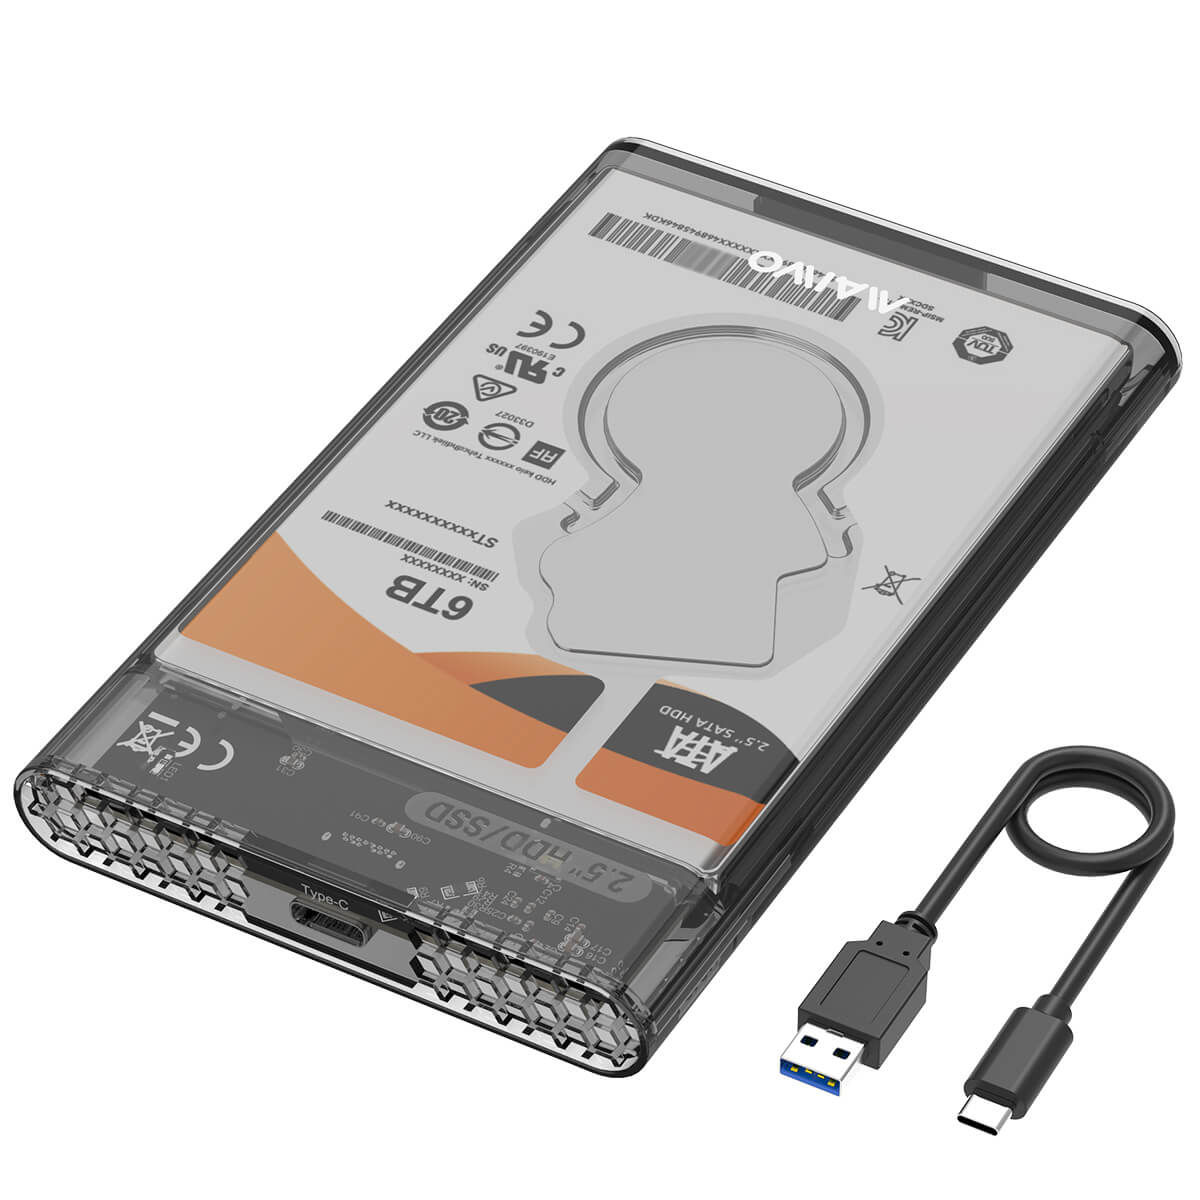 MAIWO K2510 Tool-Free USB C to SATA III External Hard Drive Enclosure Case for All 7mm 9.5mm 2.5 inc